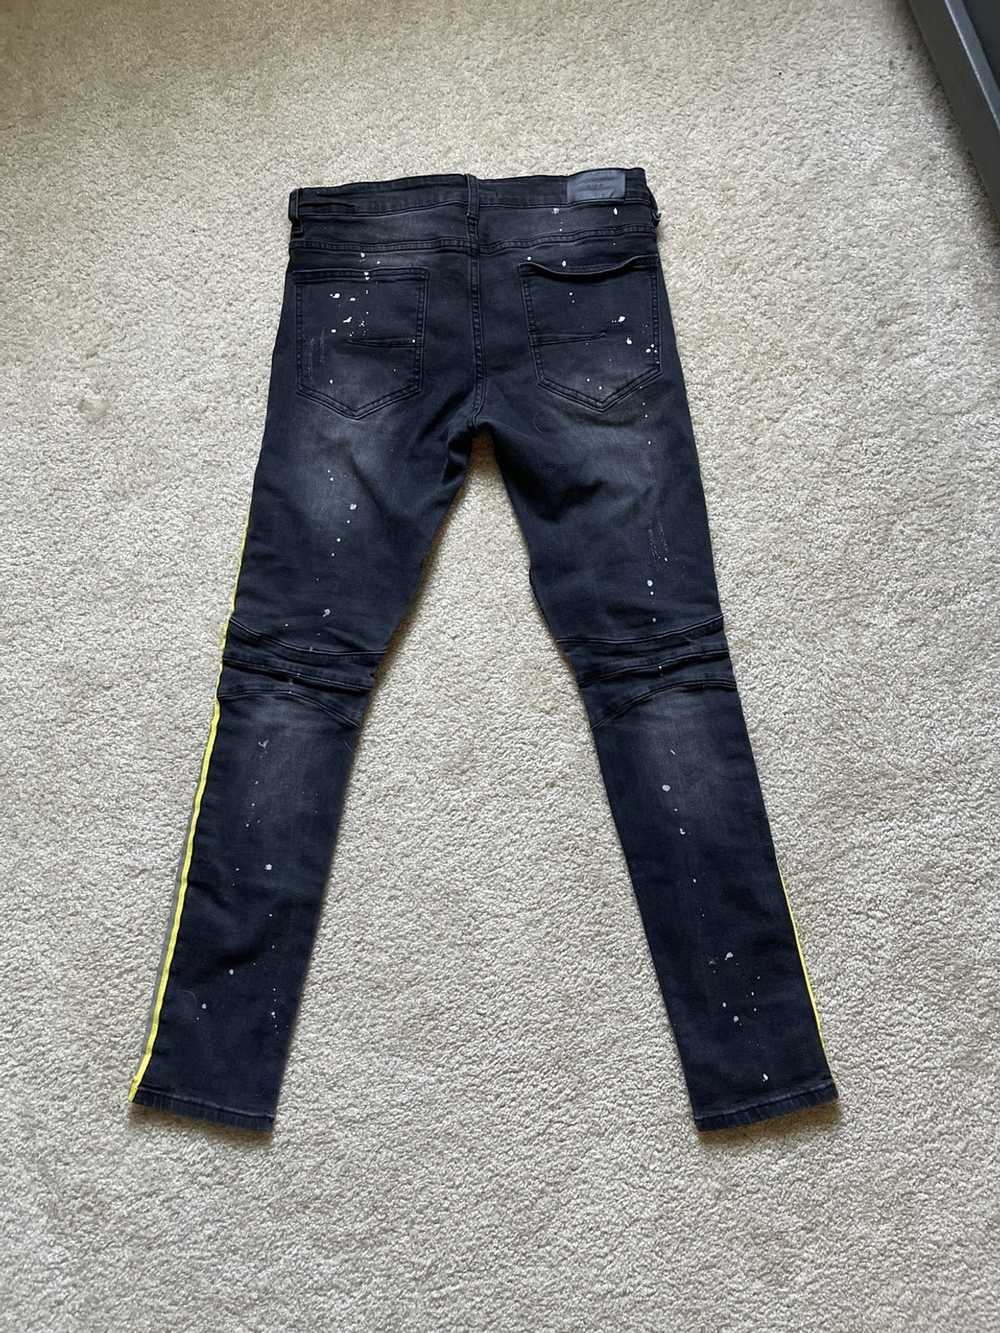 Other KDNK reflective pants - image 3